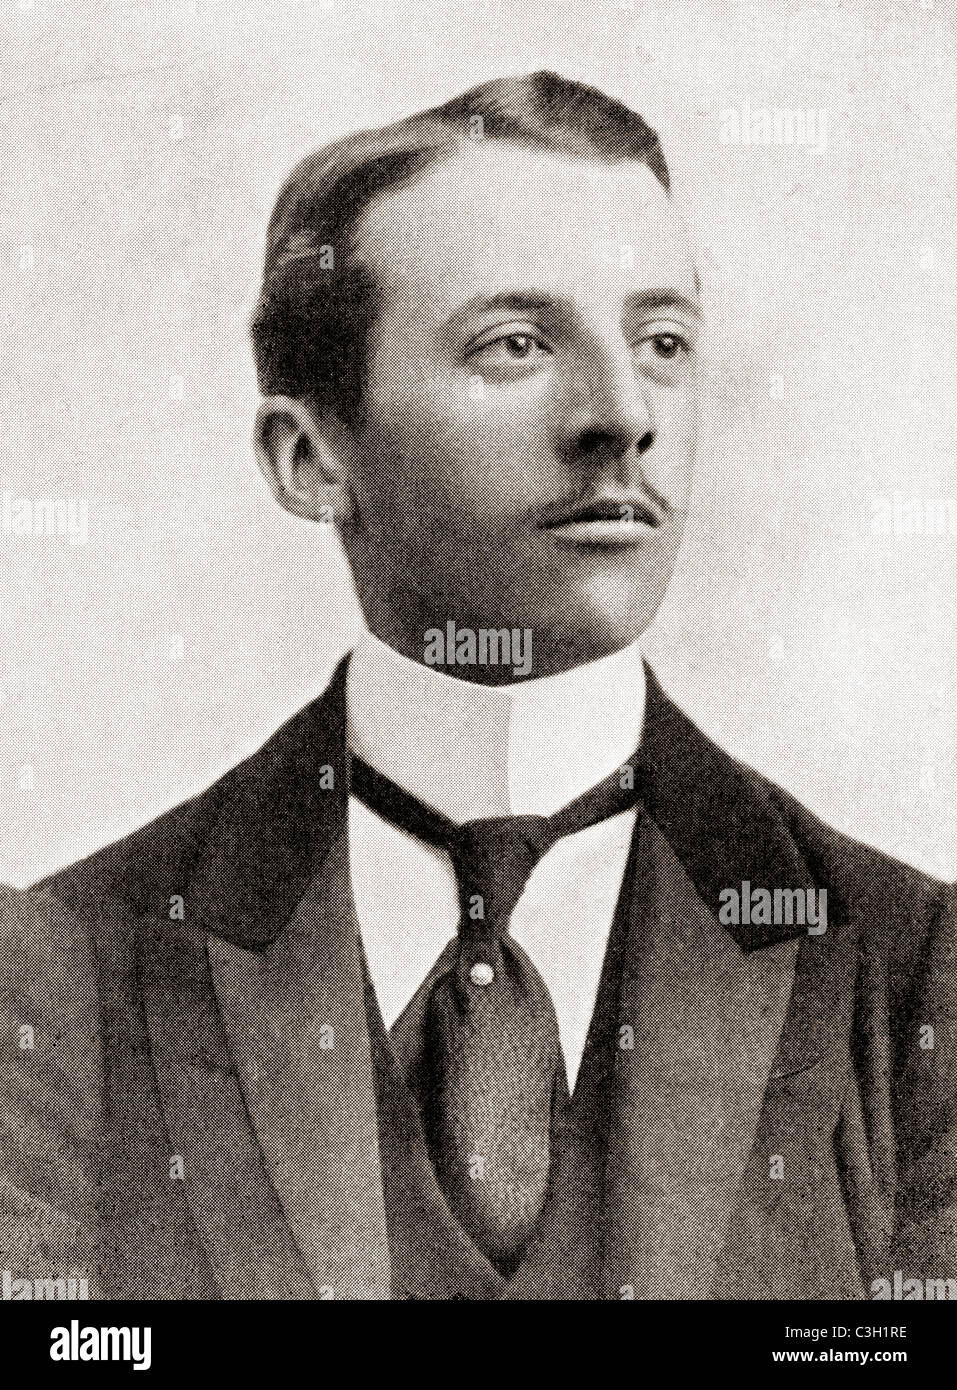 William "Billy" Wentworth-Fitzde Meuron Charles William, 7e comte FitzWilliam, 1872 - 1943. Aristocrate britannique. Banque D'Images